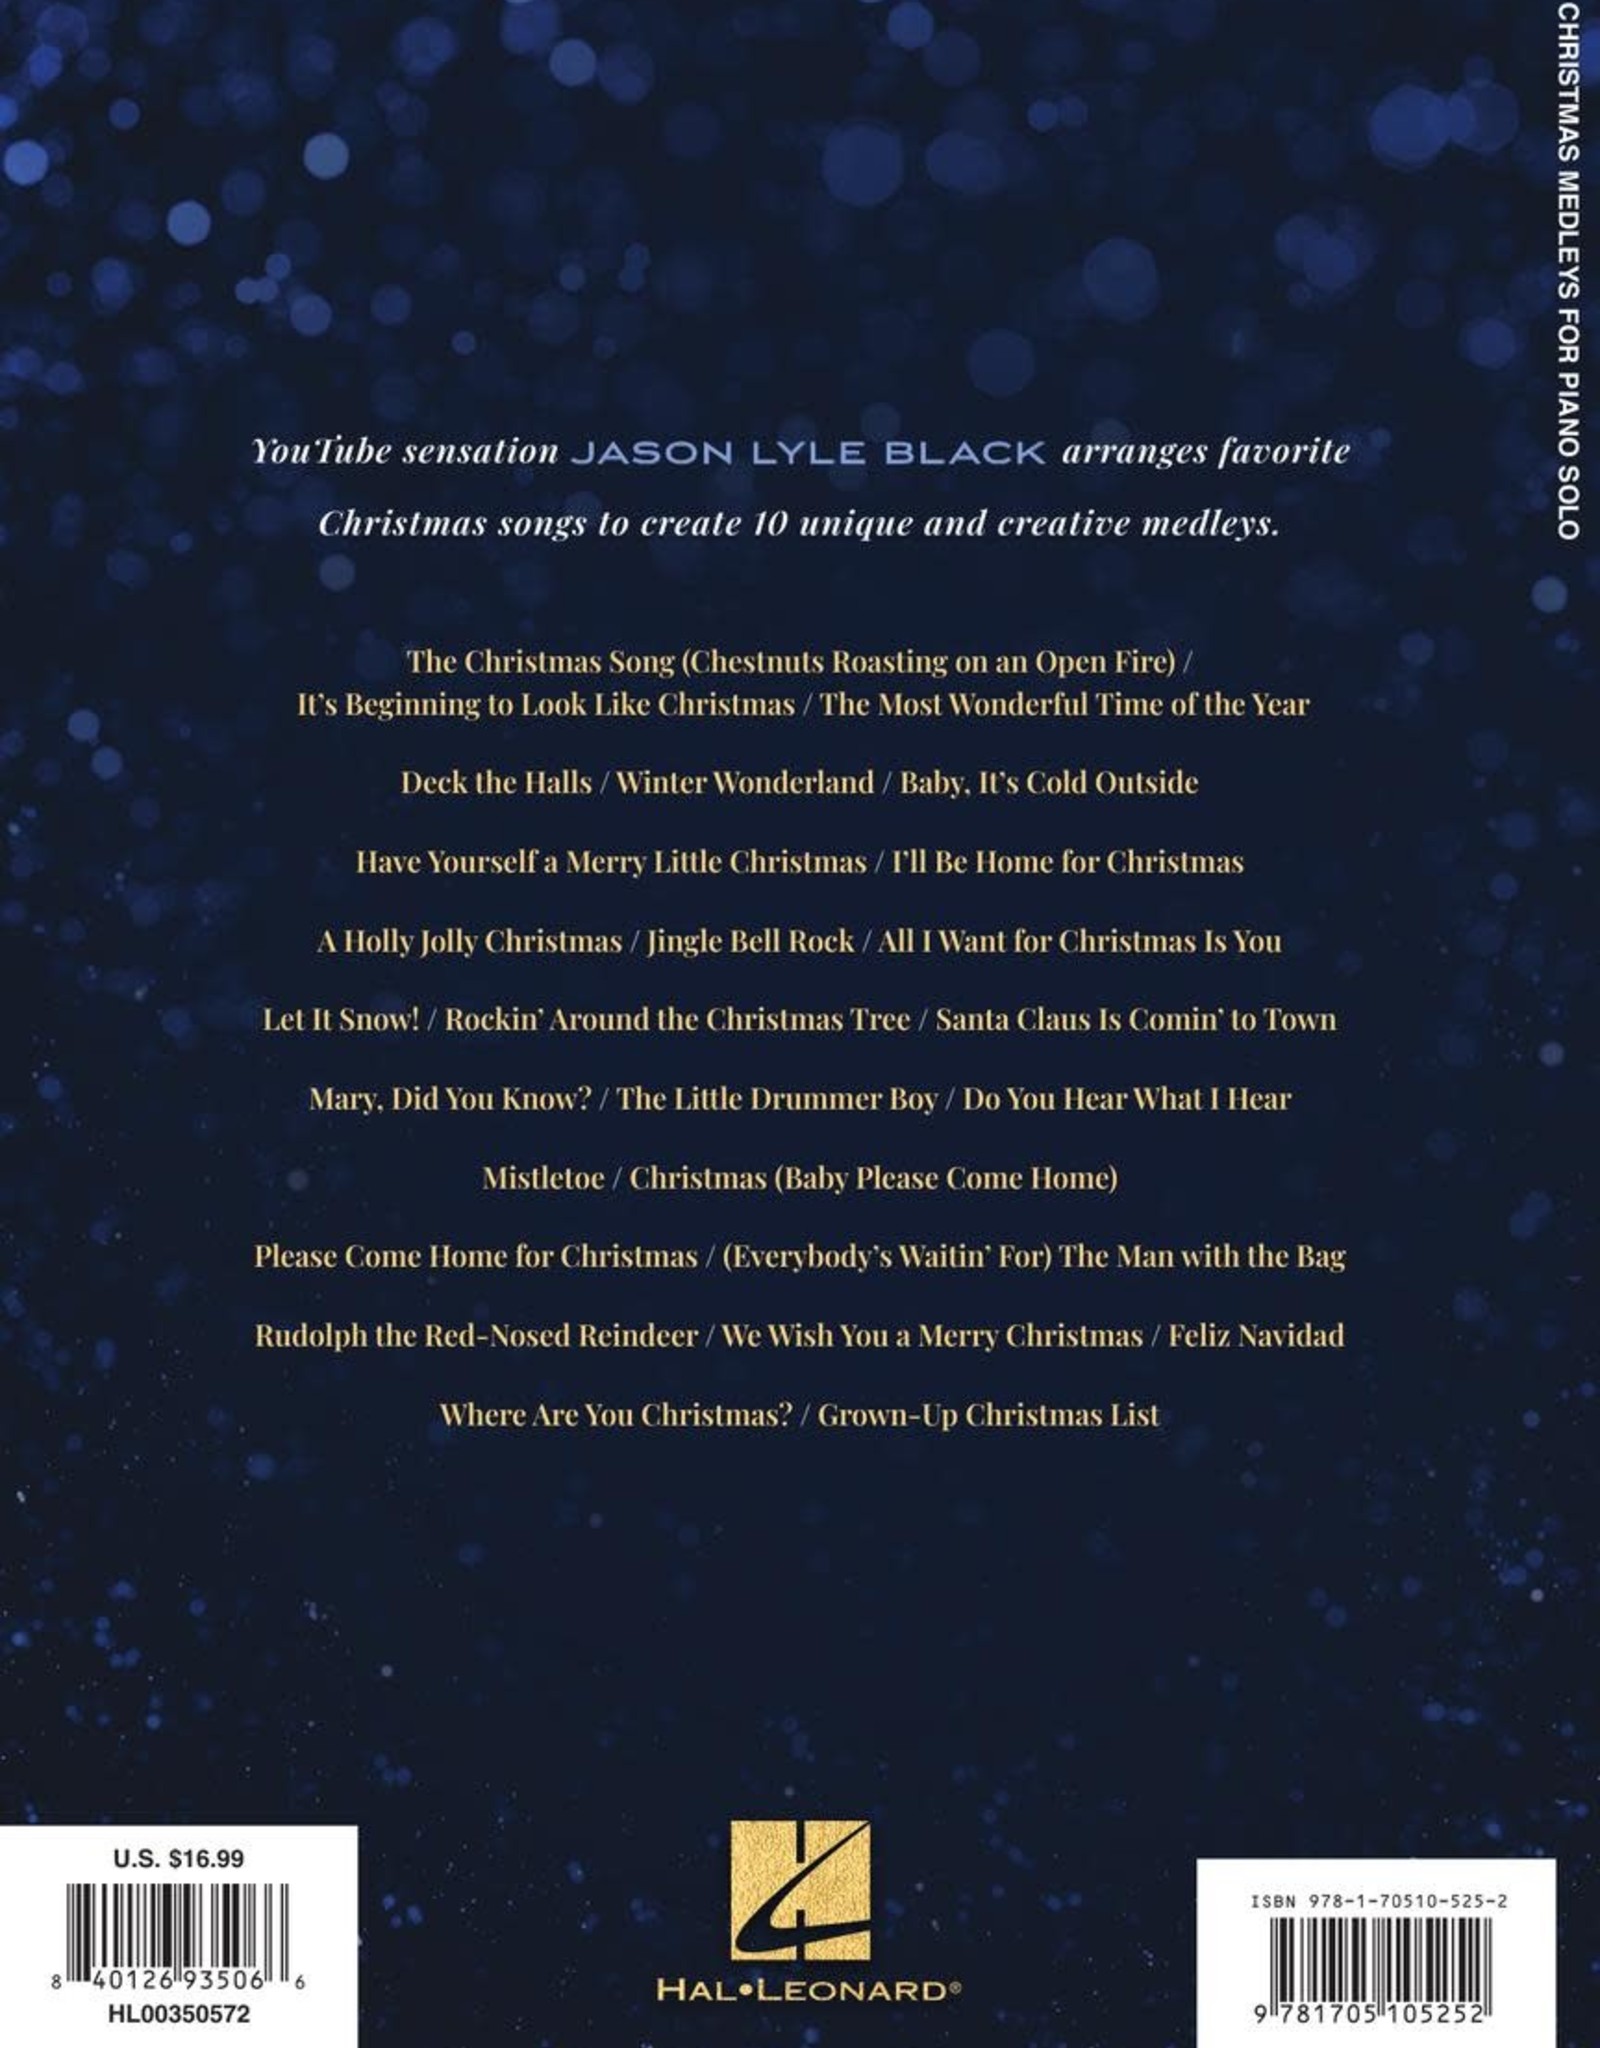 Hal Leonard Christmas Medleys for Piano Solo arr. Jason Lyle Black